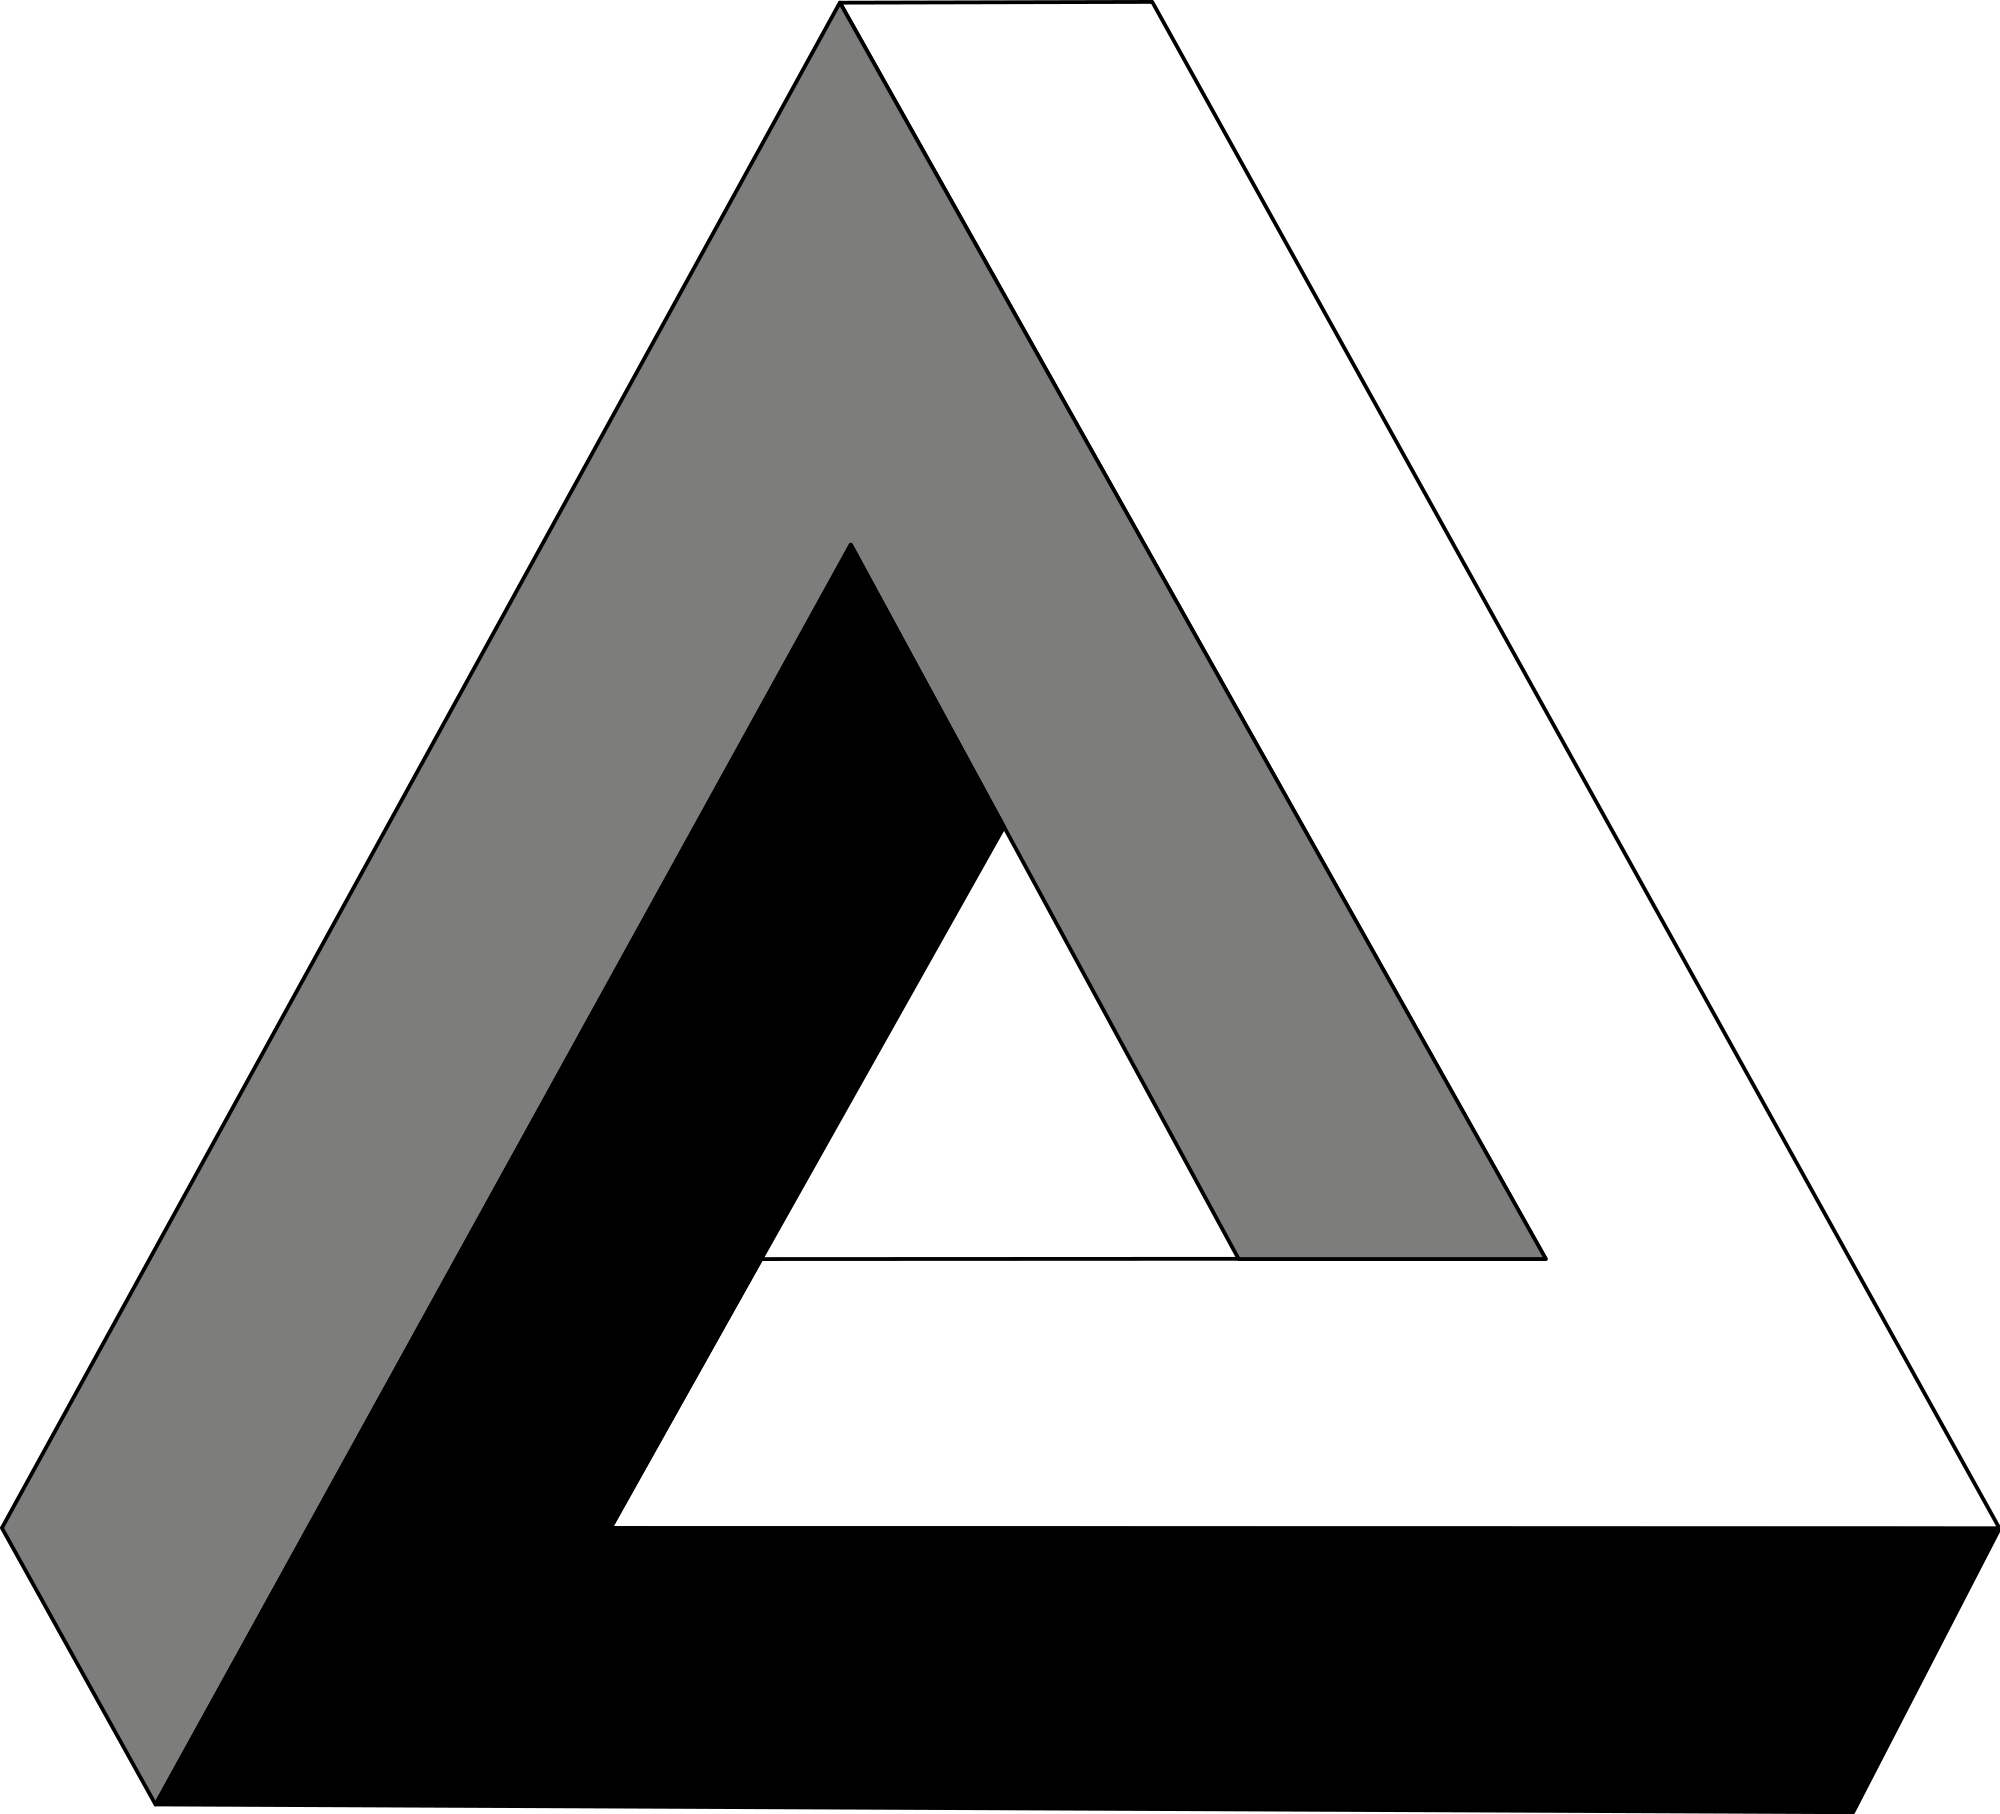 File:Penrose-dreieck.svg - Wikimedia Commons